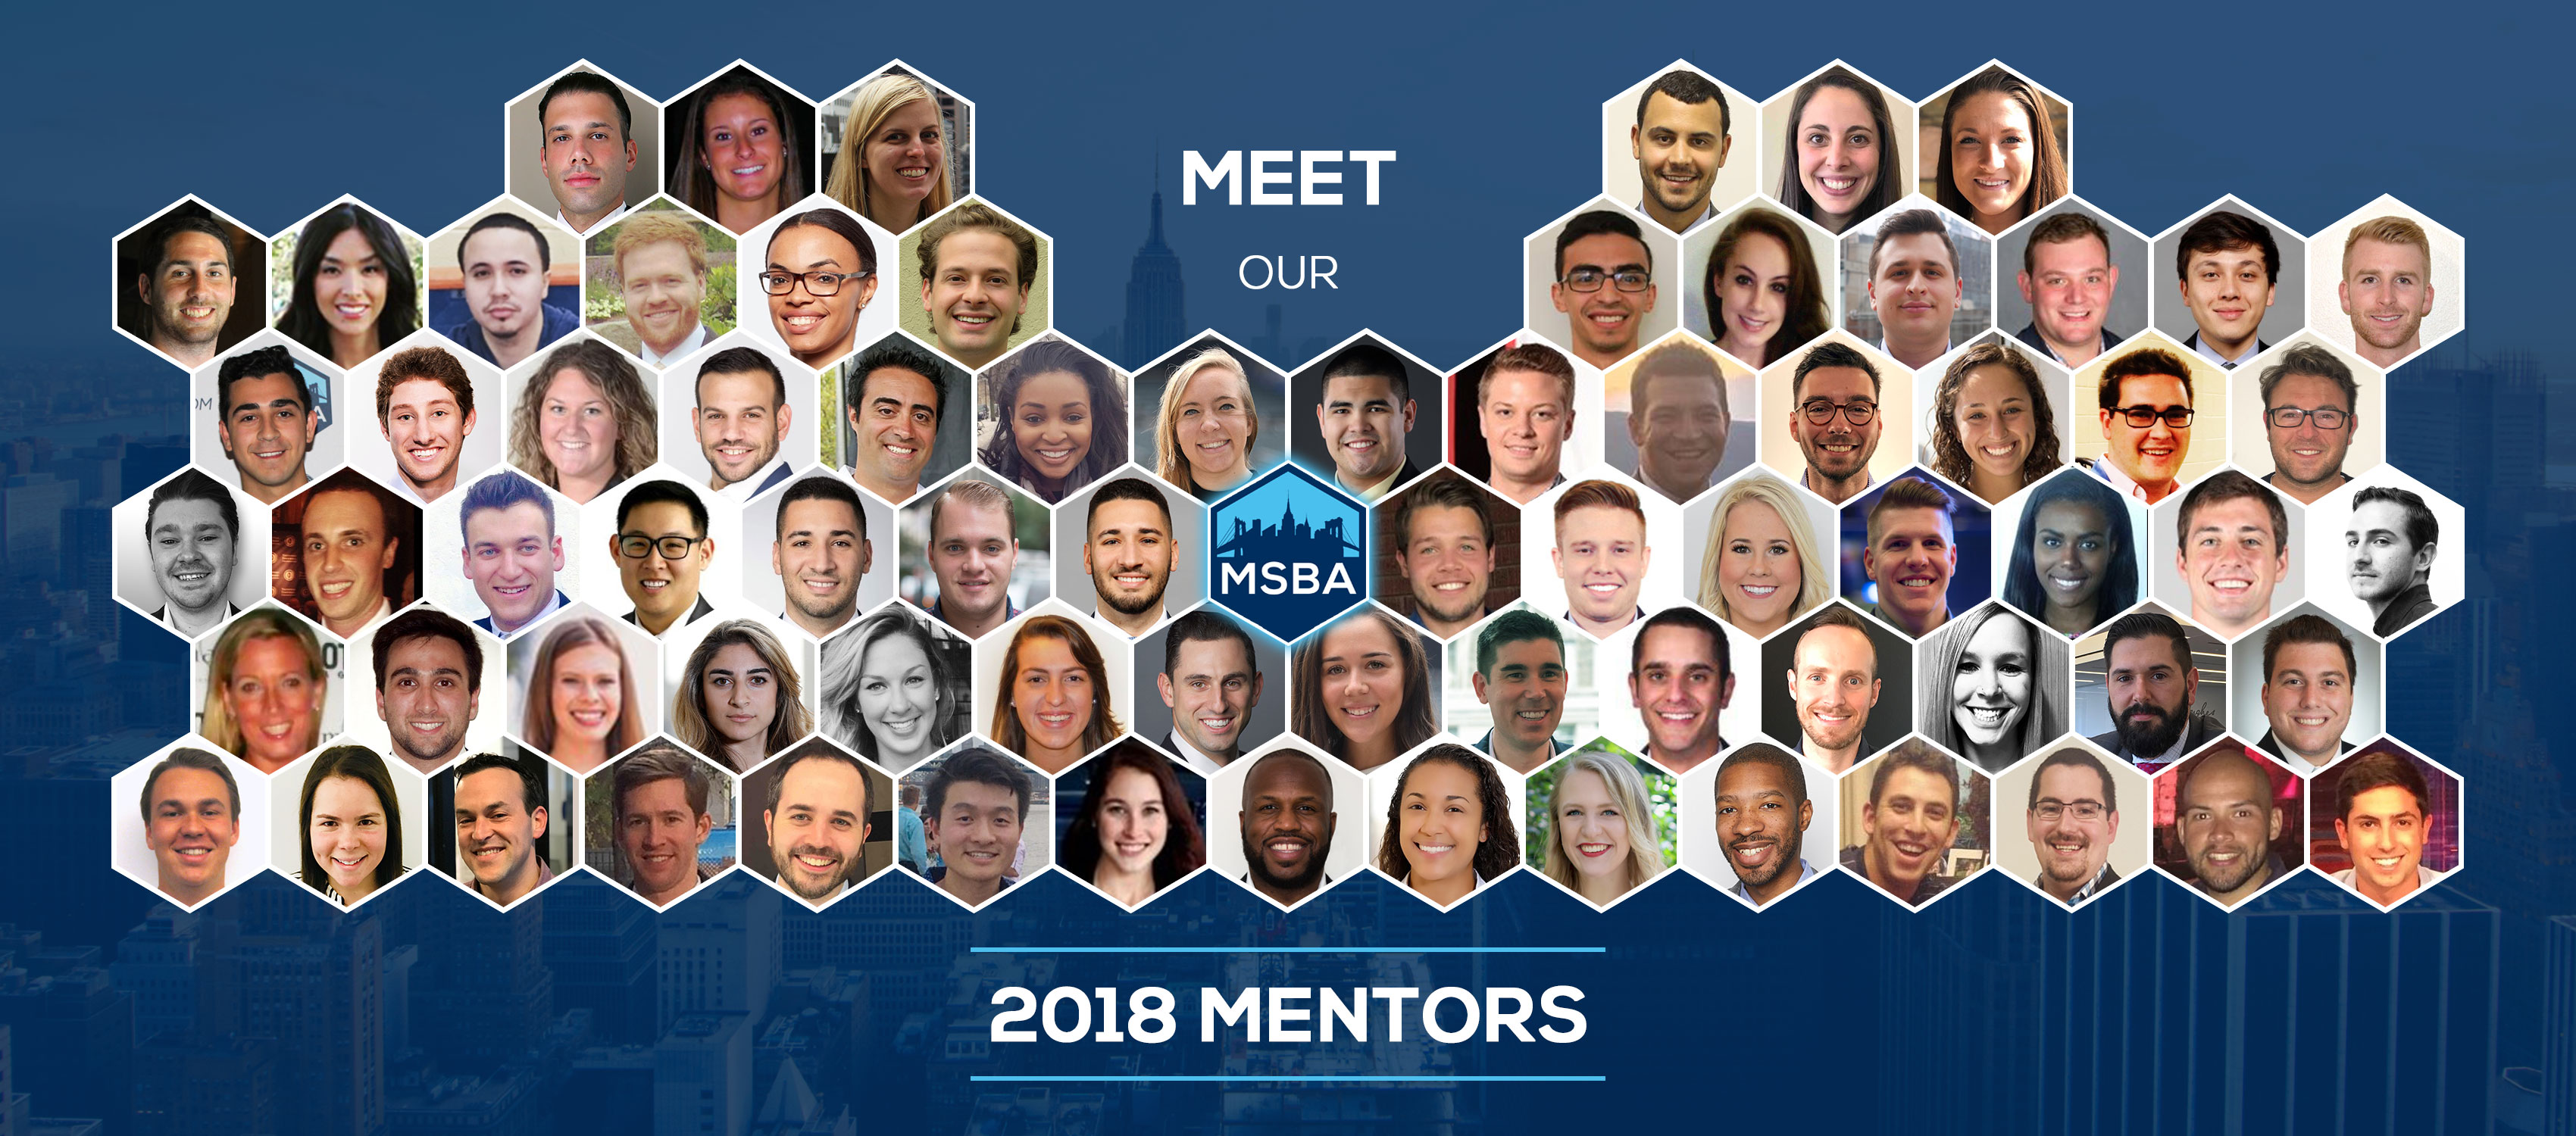 Meet-the-MSBA-Alumni